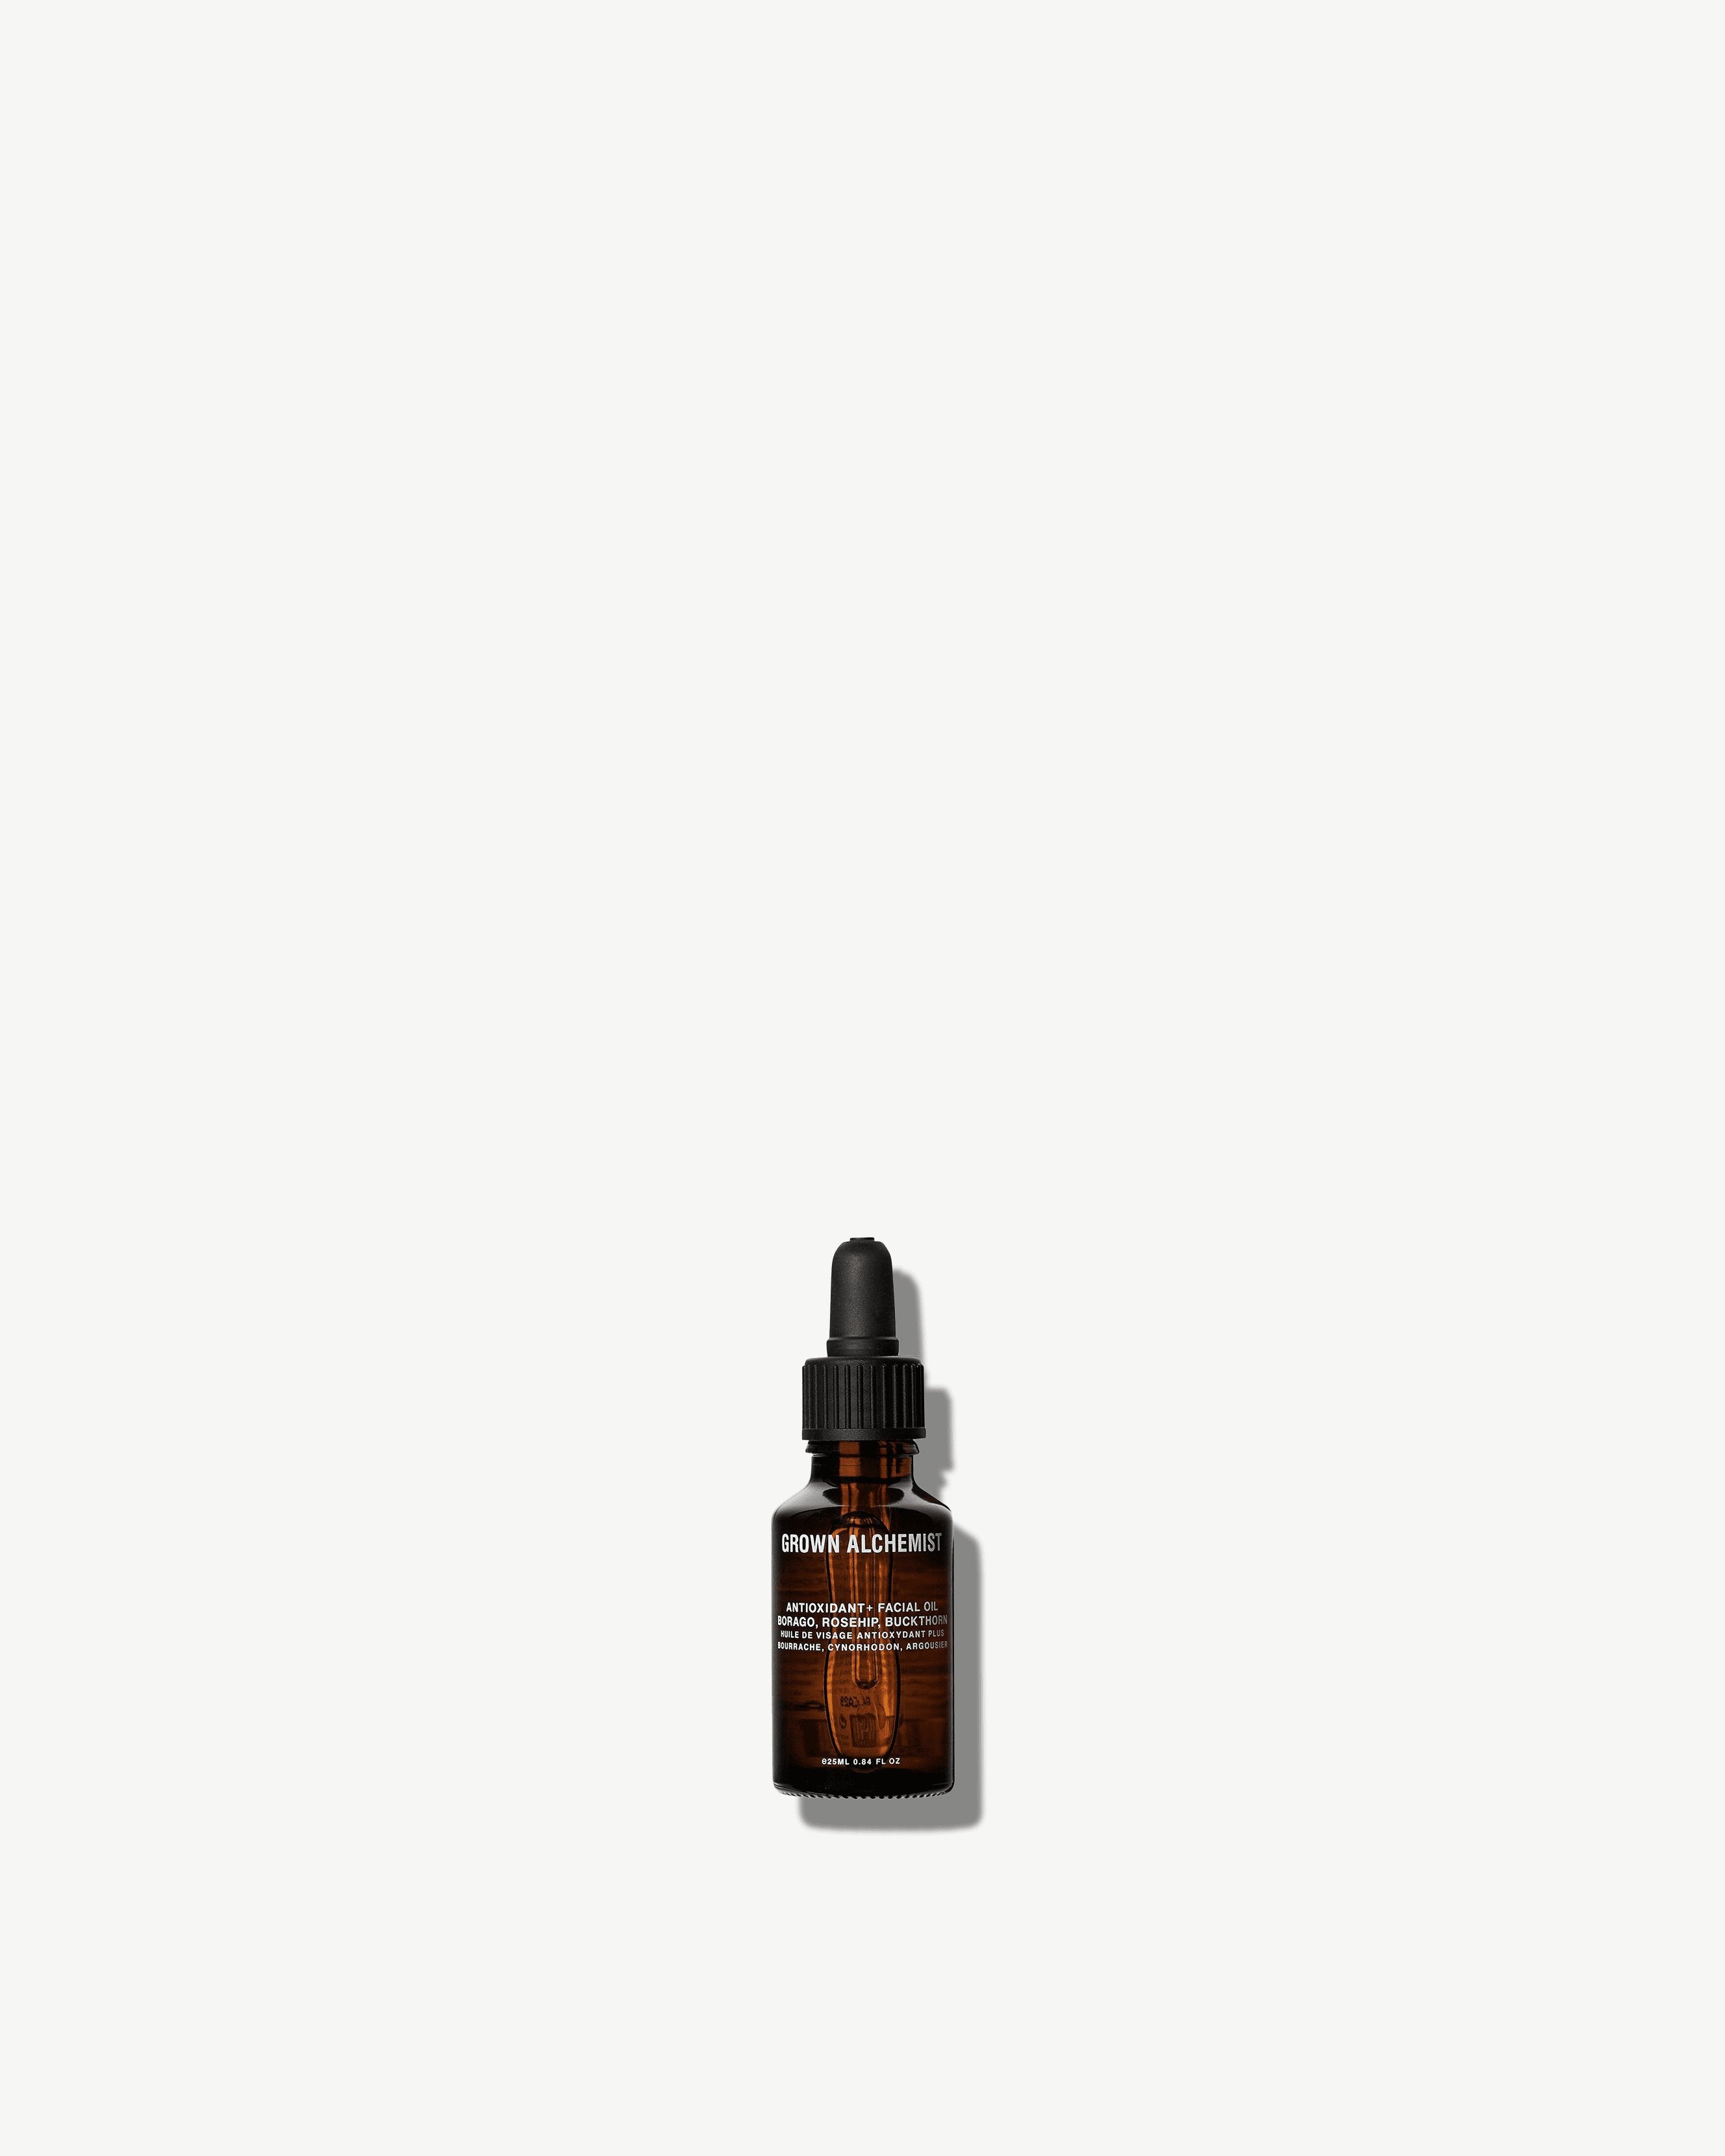 Grown Alchemist Antioxidant + Facial Oil - Clean, Natural Moisturizer Oil –  Credo